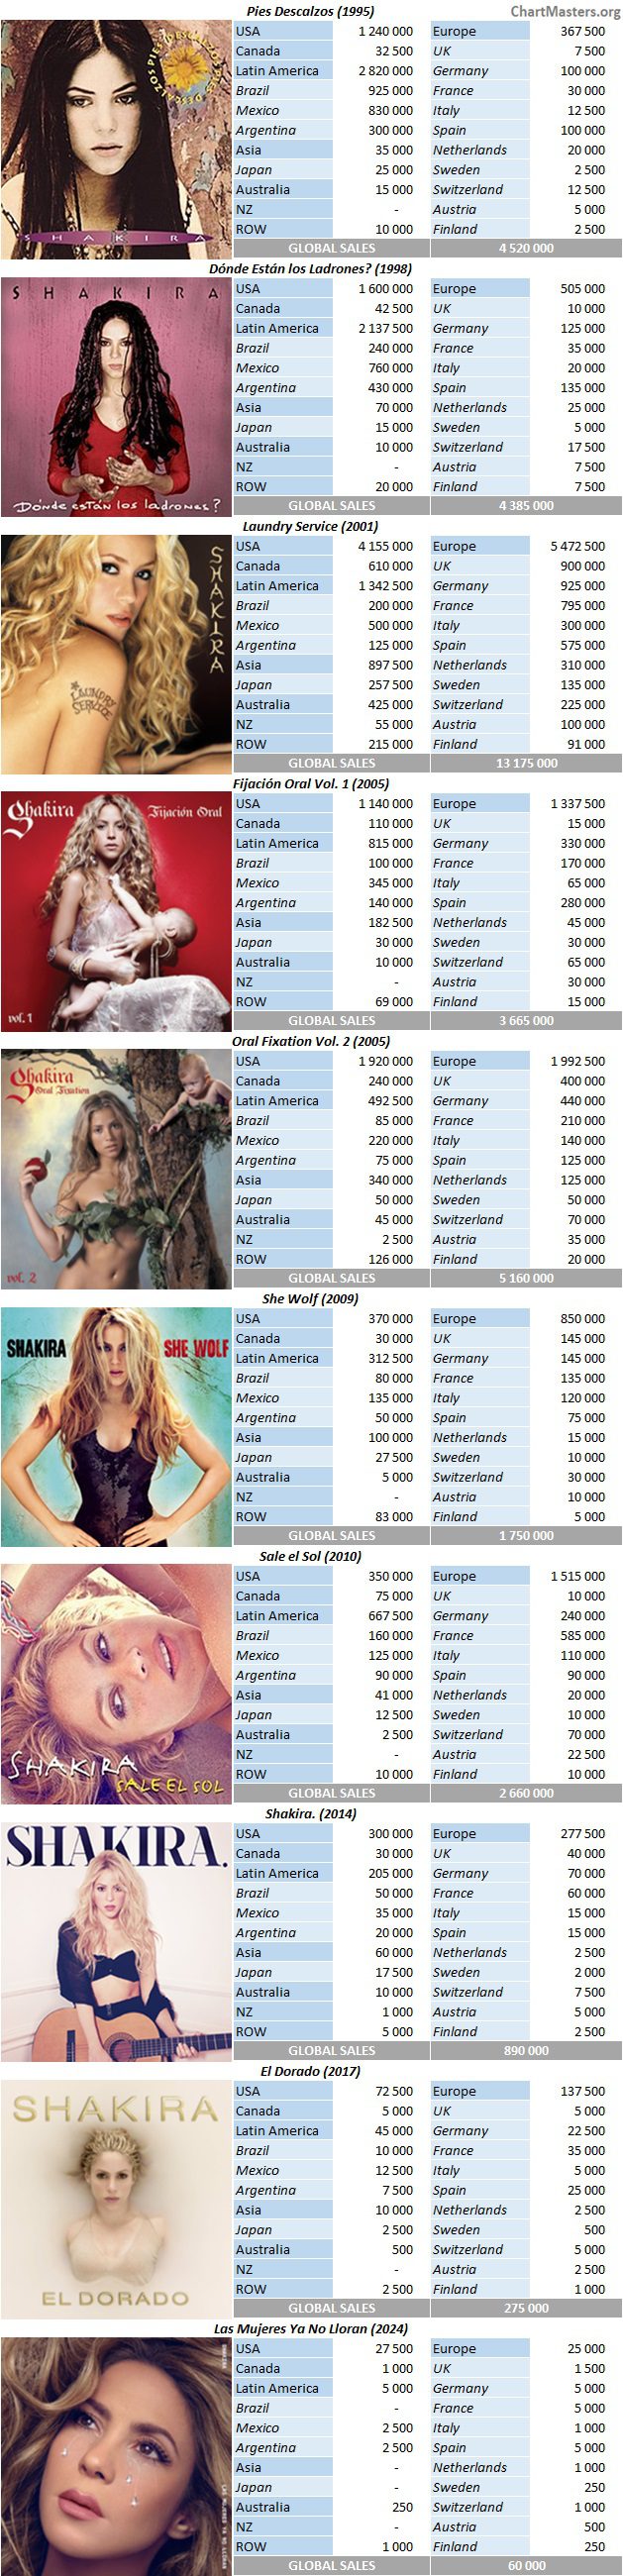 CSPC Shakira album sales breakdowns